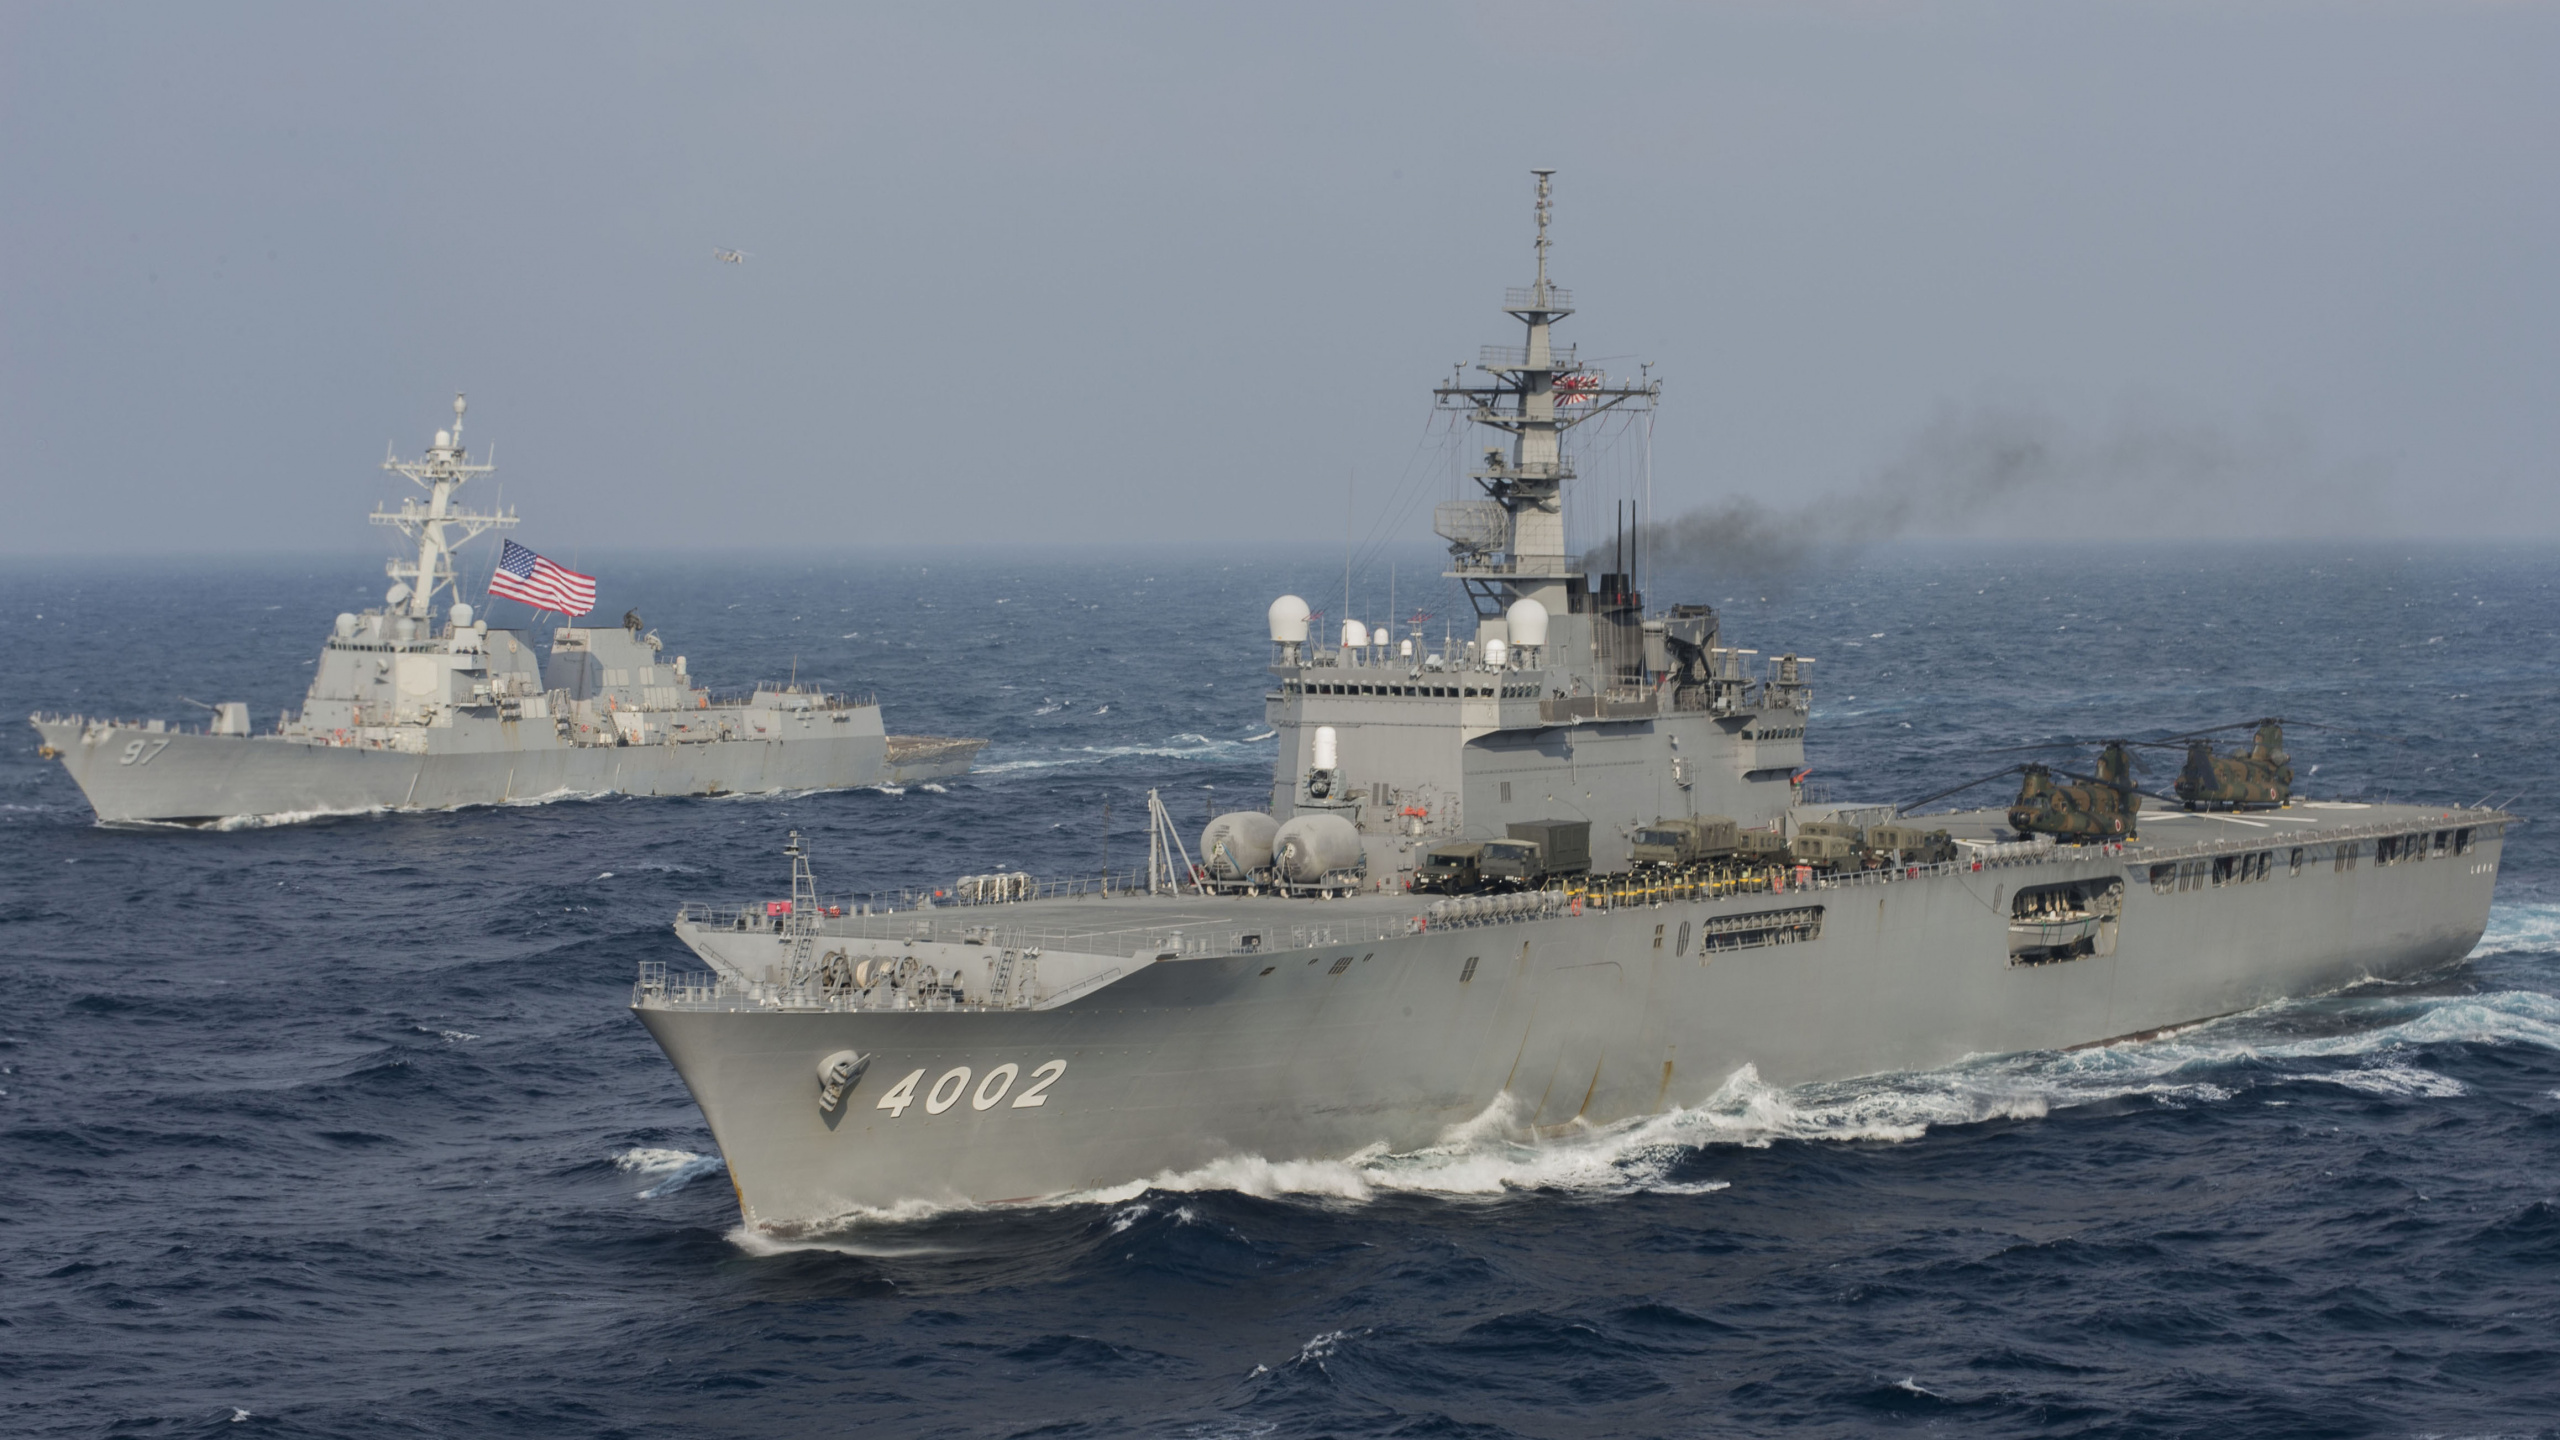 USS Halsey DDG-97, Japan Maritime Self-Defense Force, JS Shimokita, Warship, Navy. Wallpaper in 2560x1440 Resolution